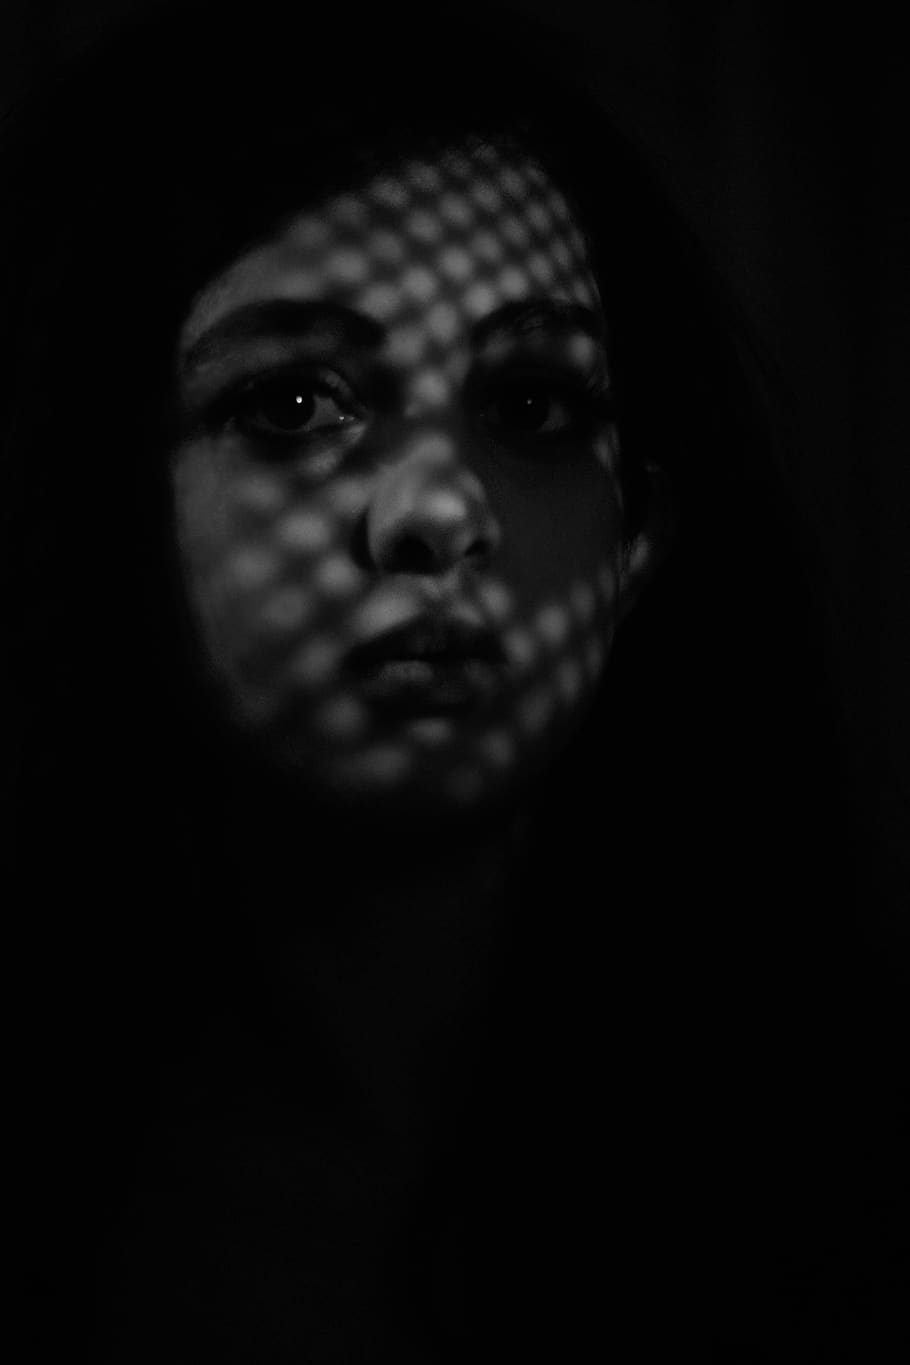 woman, face, shadow, dark, gloomy, spooky, scary, portrait, moody, bw